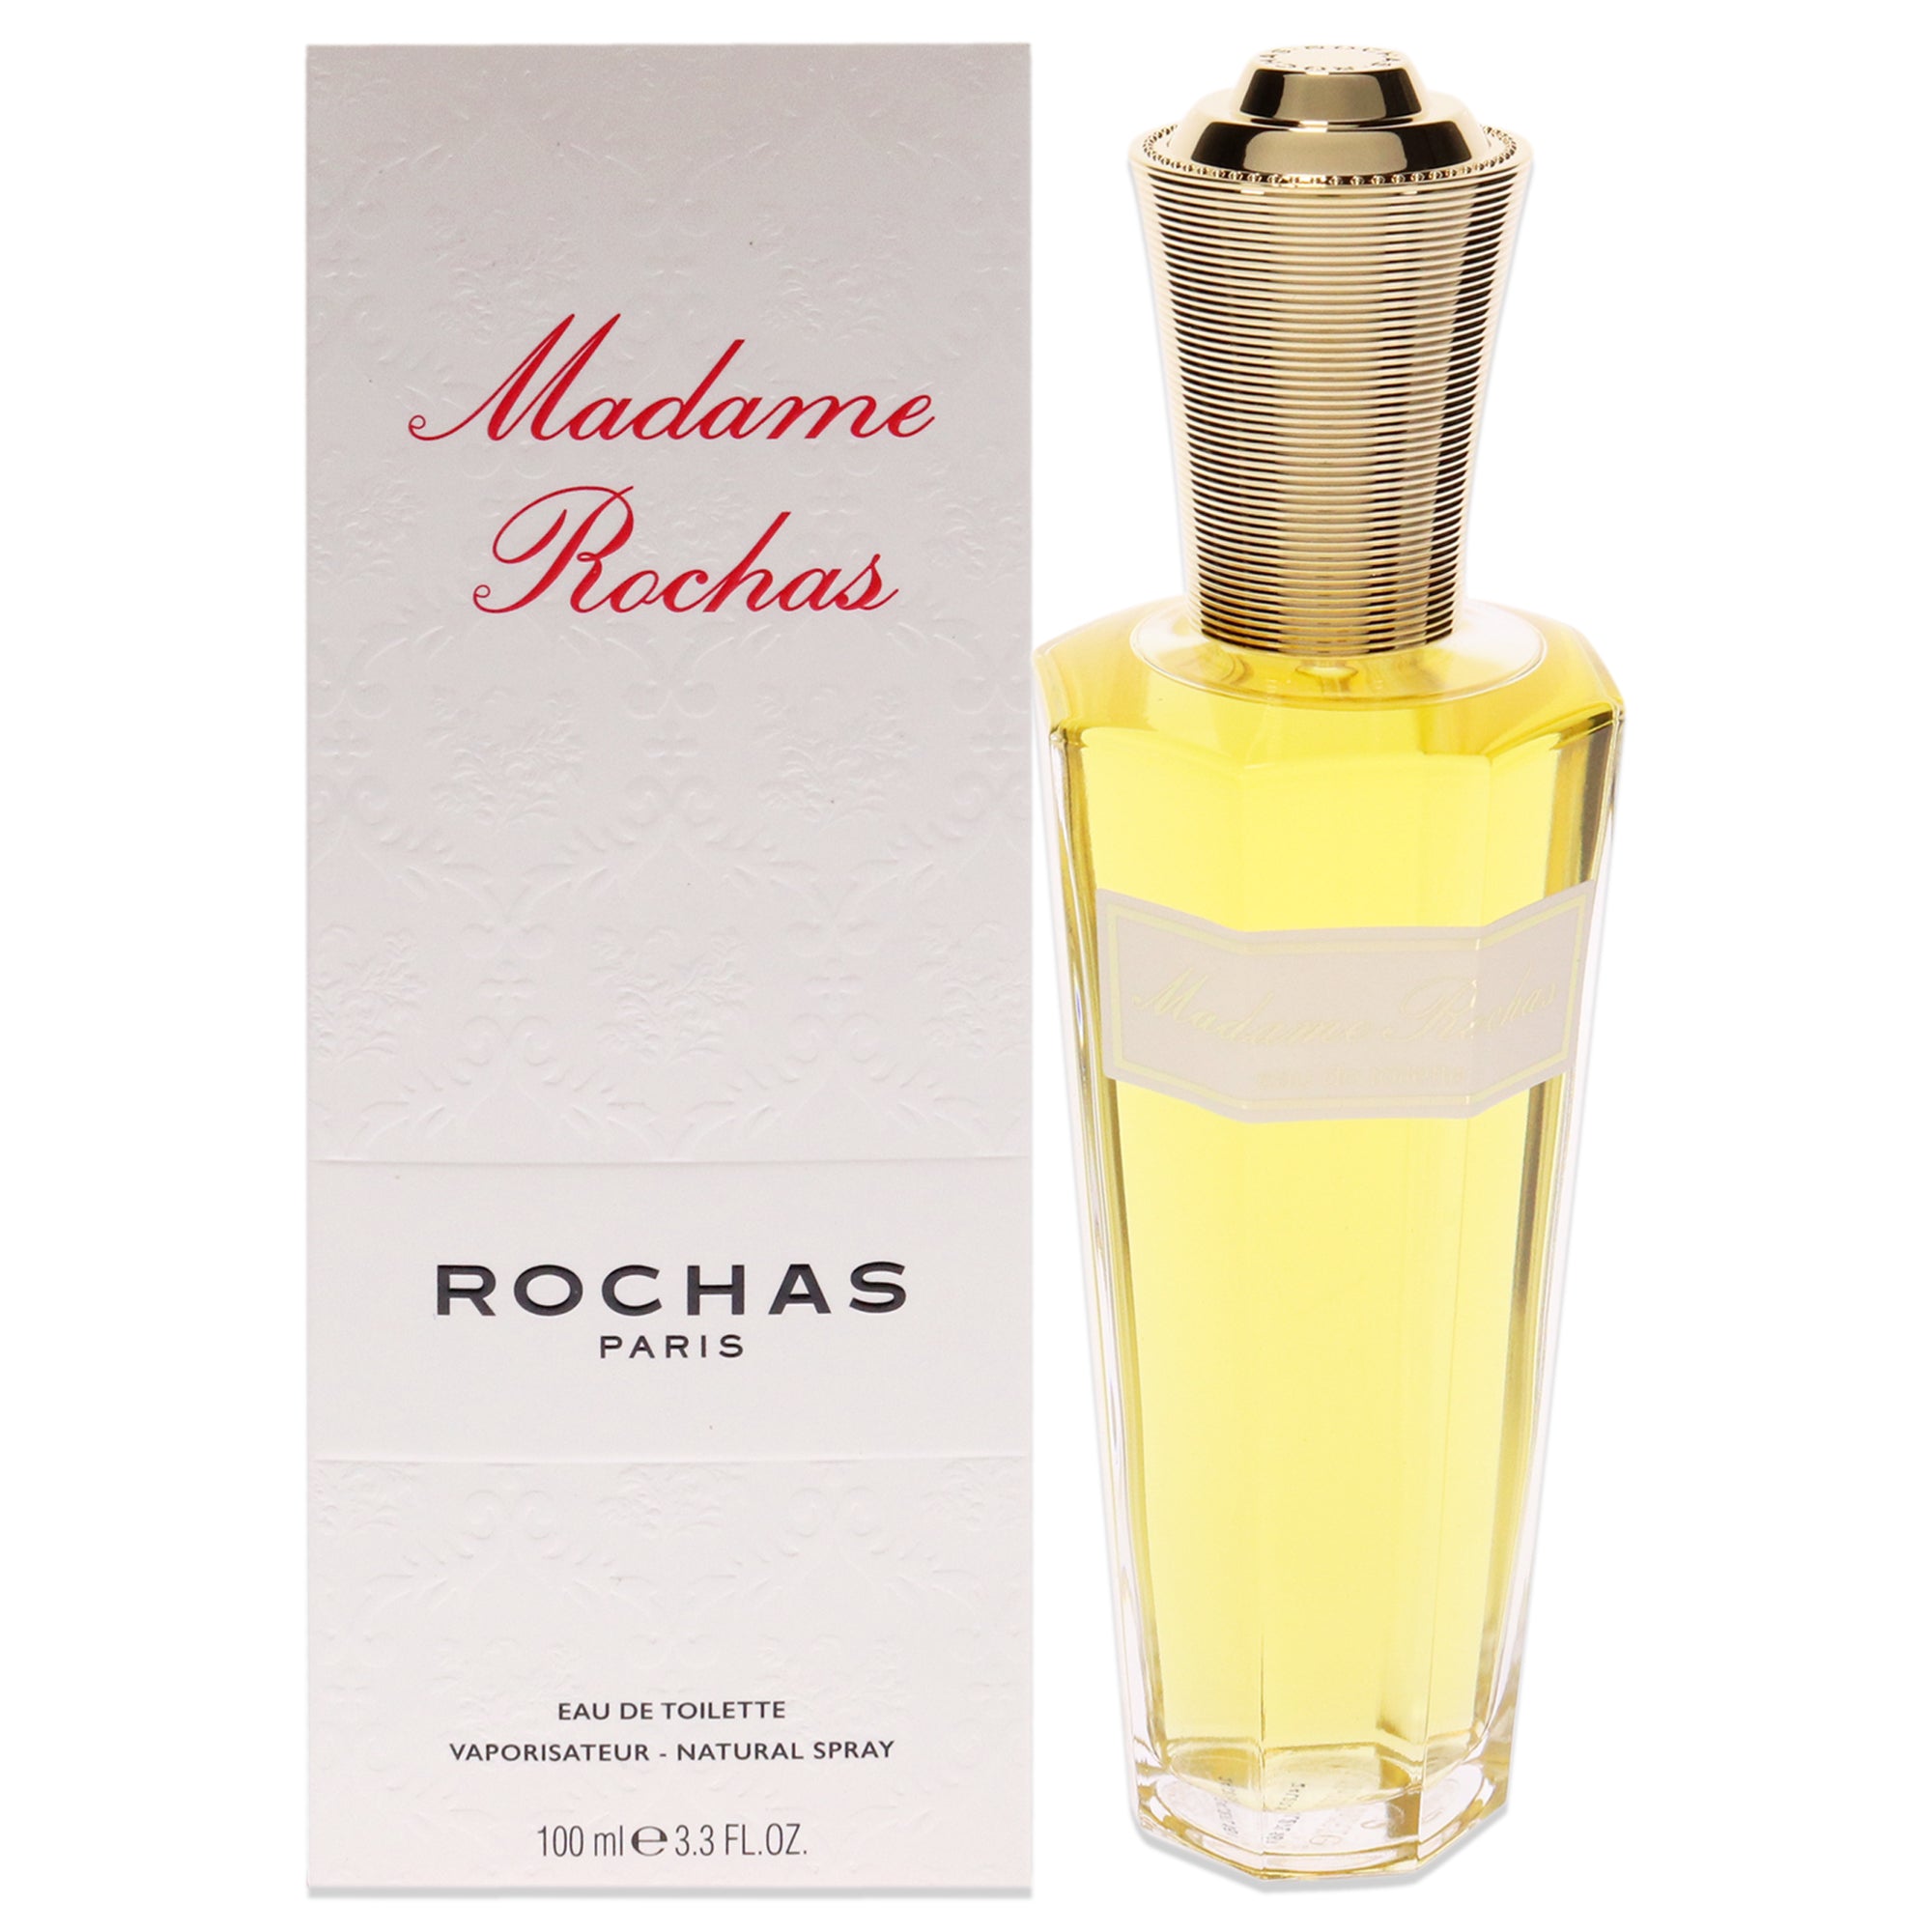 Madame Rochas by Rochas 3.3 oz Eau de Toilette Spray for Women